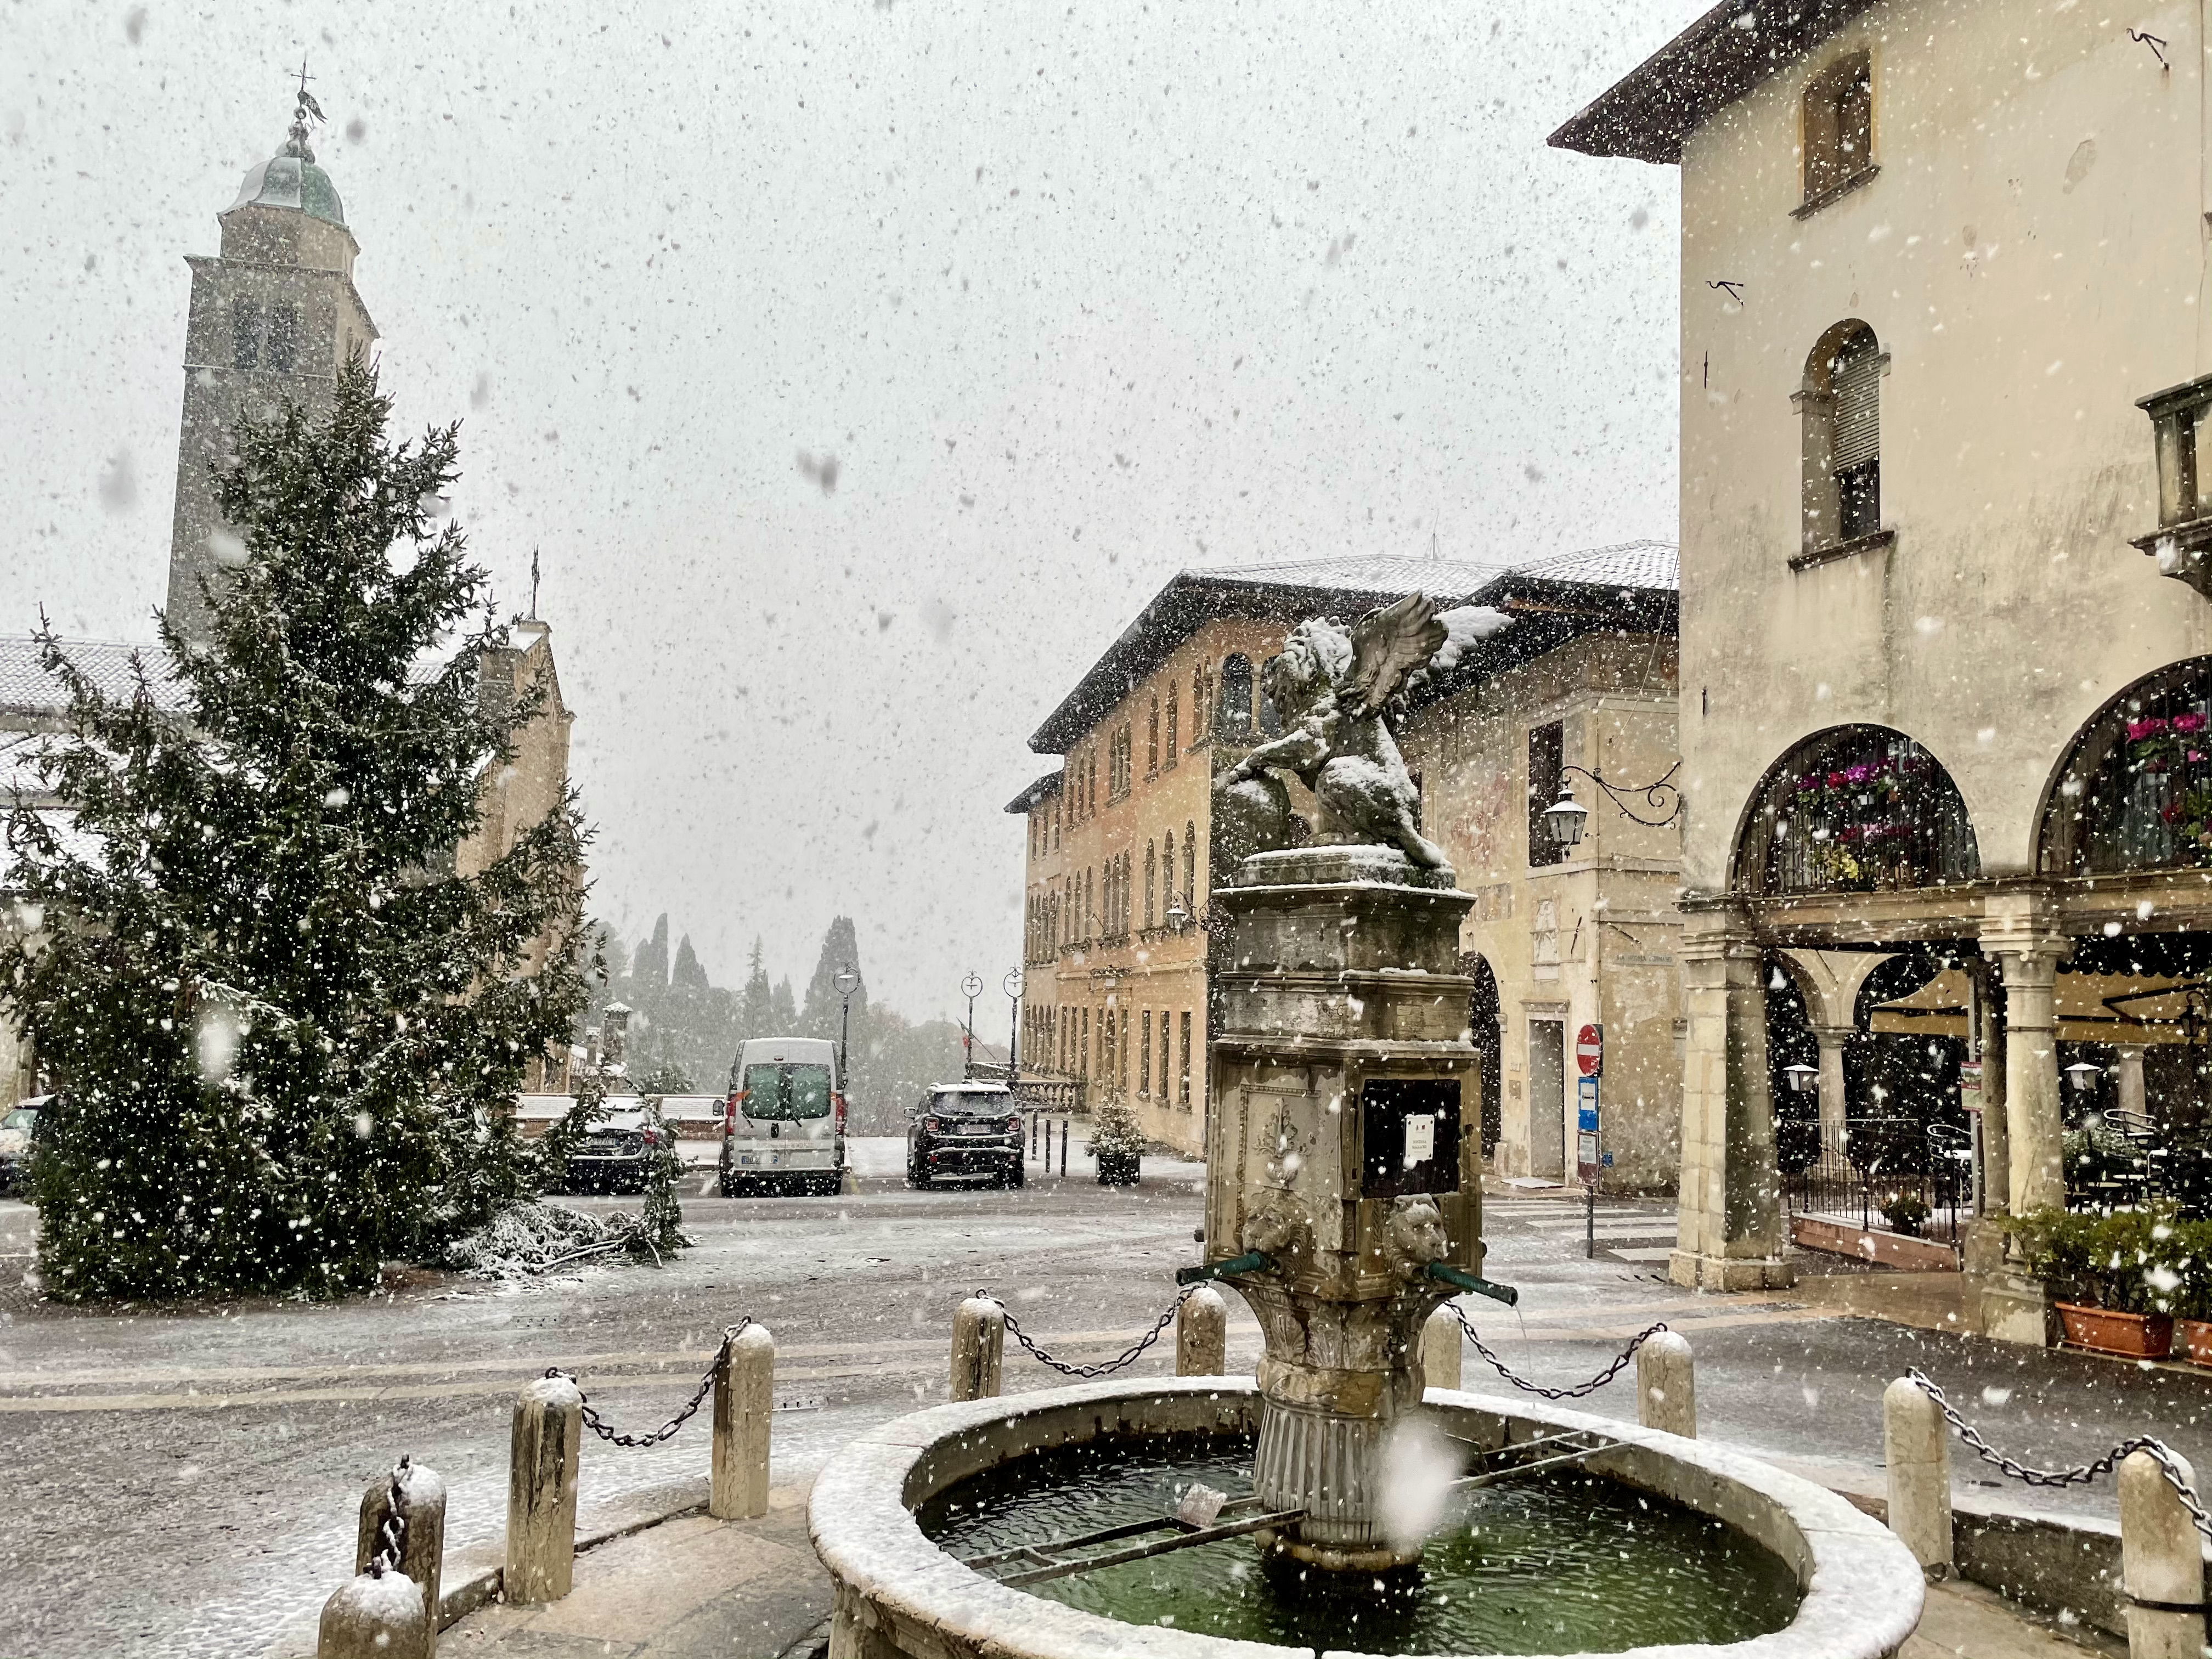 Photo taken near our office in Asolo Italy by Managing Partner Scott Newton December 2020